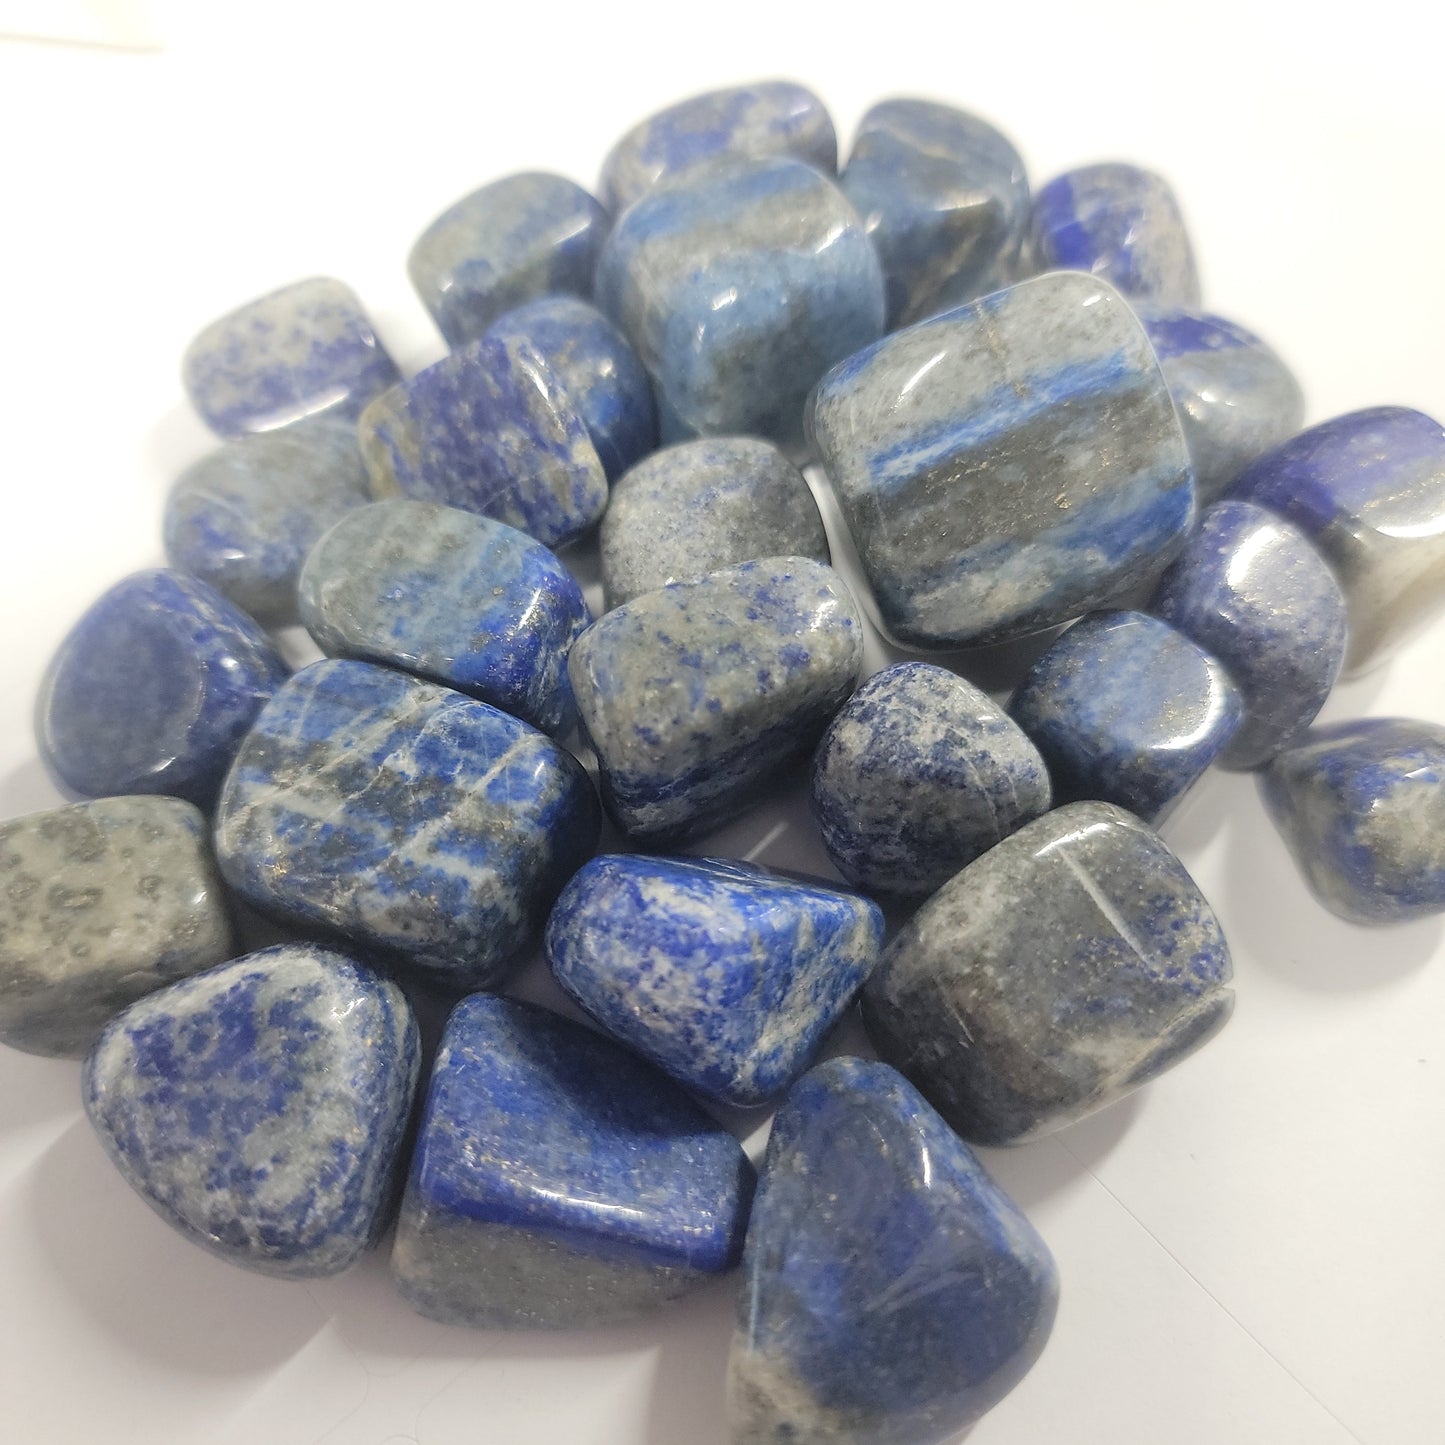 Lapis Lazuli Tumbled Stone, 1 Pound Bag (Approx. 20-25 mm) WT-0081-B